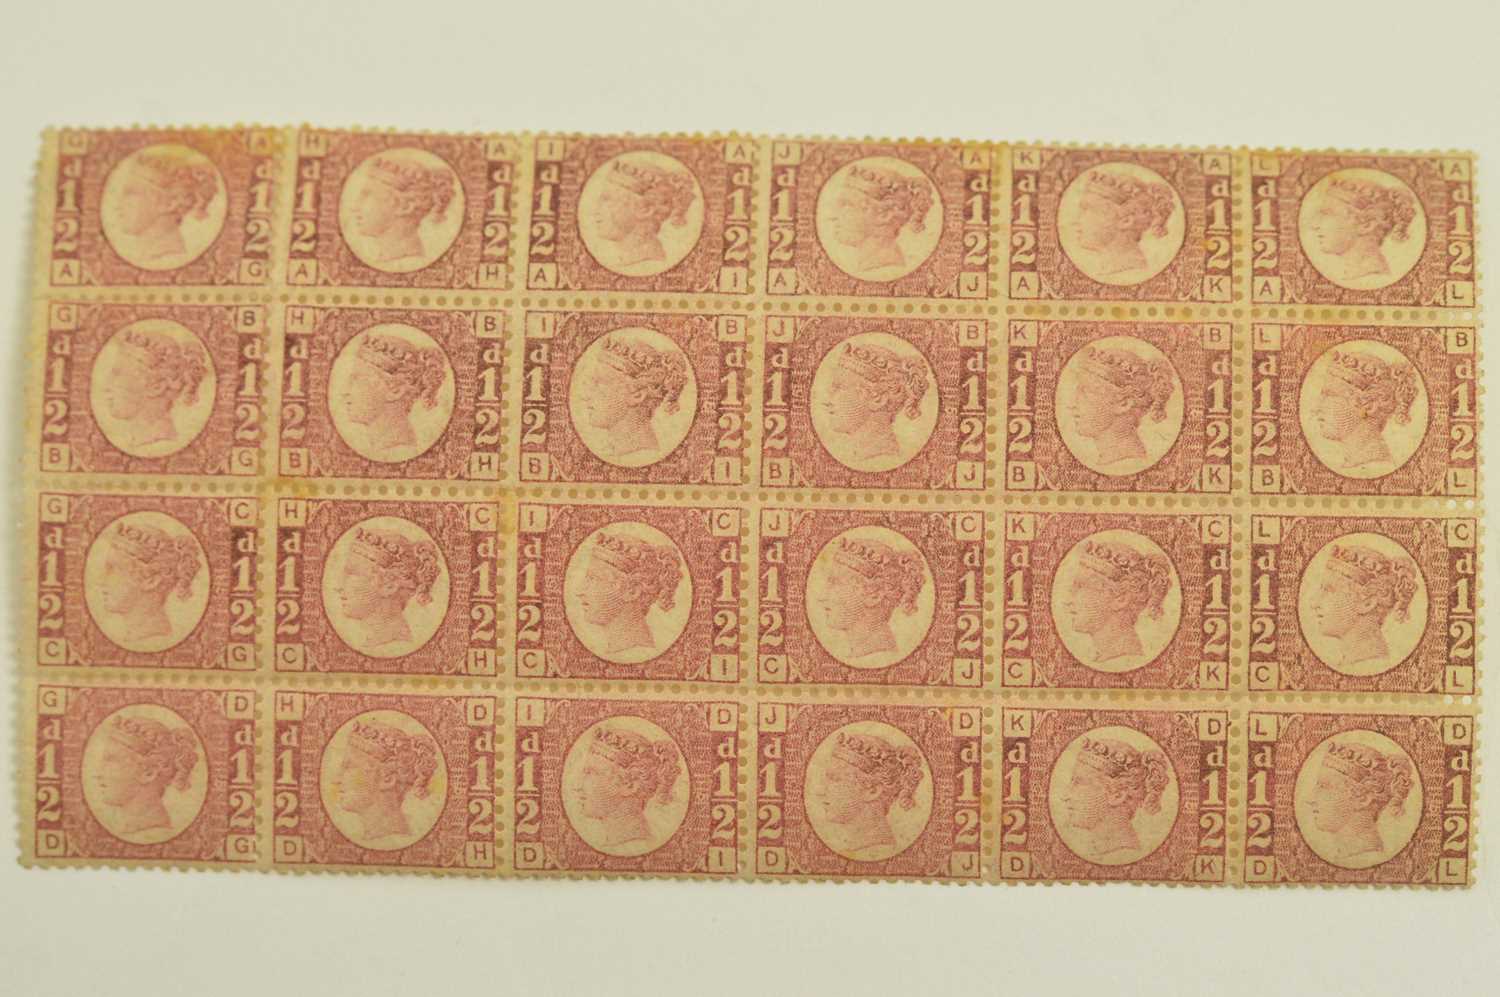 Lot 795 - GB QV 1870 1/2d. rose-red block of twenty-four